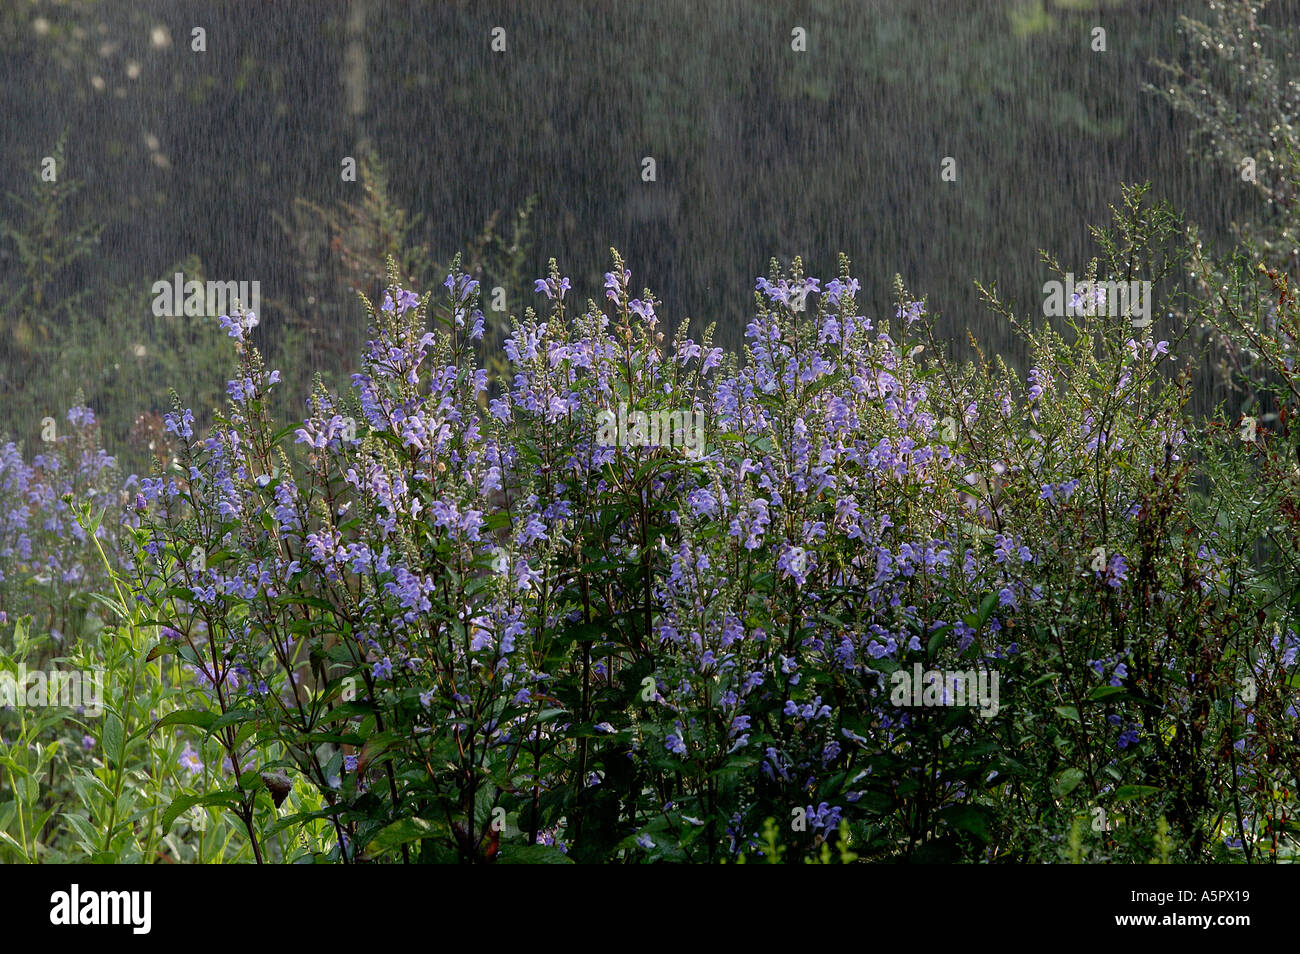 Woundwort in rain Stachys grandiflora hybride Garten Ziest im Regen Stock Photo